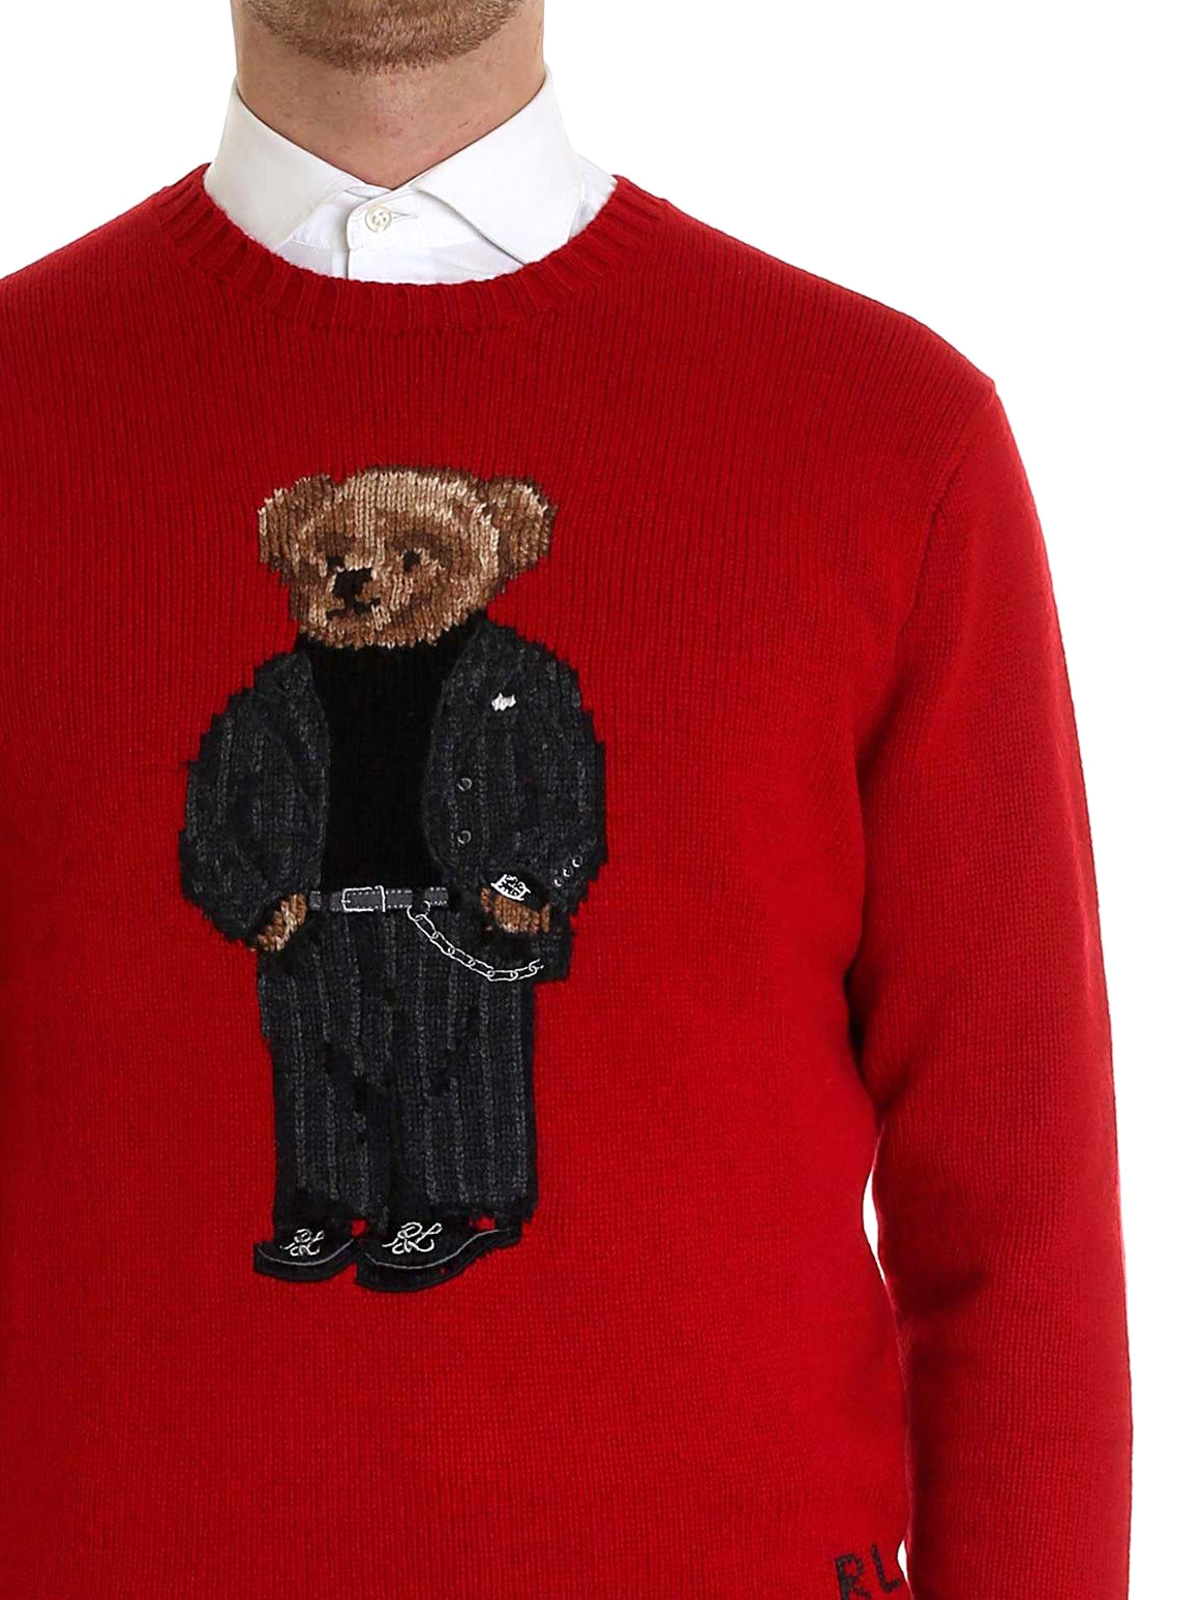 Einfachheit Satire Geistig polo ralph lauren polo bear wool sweater ...